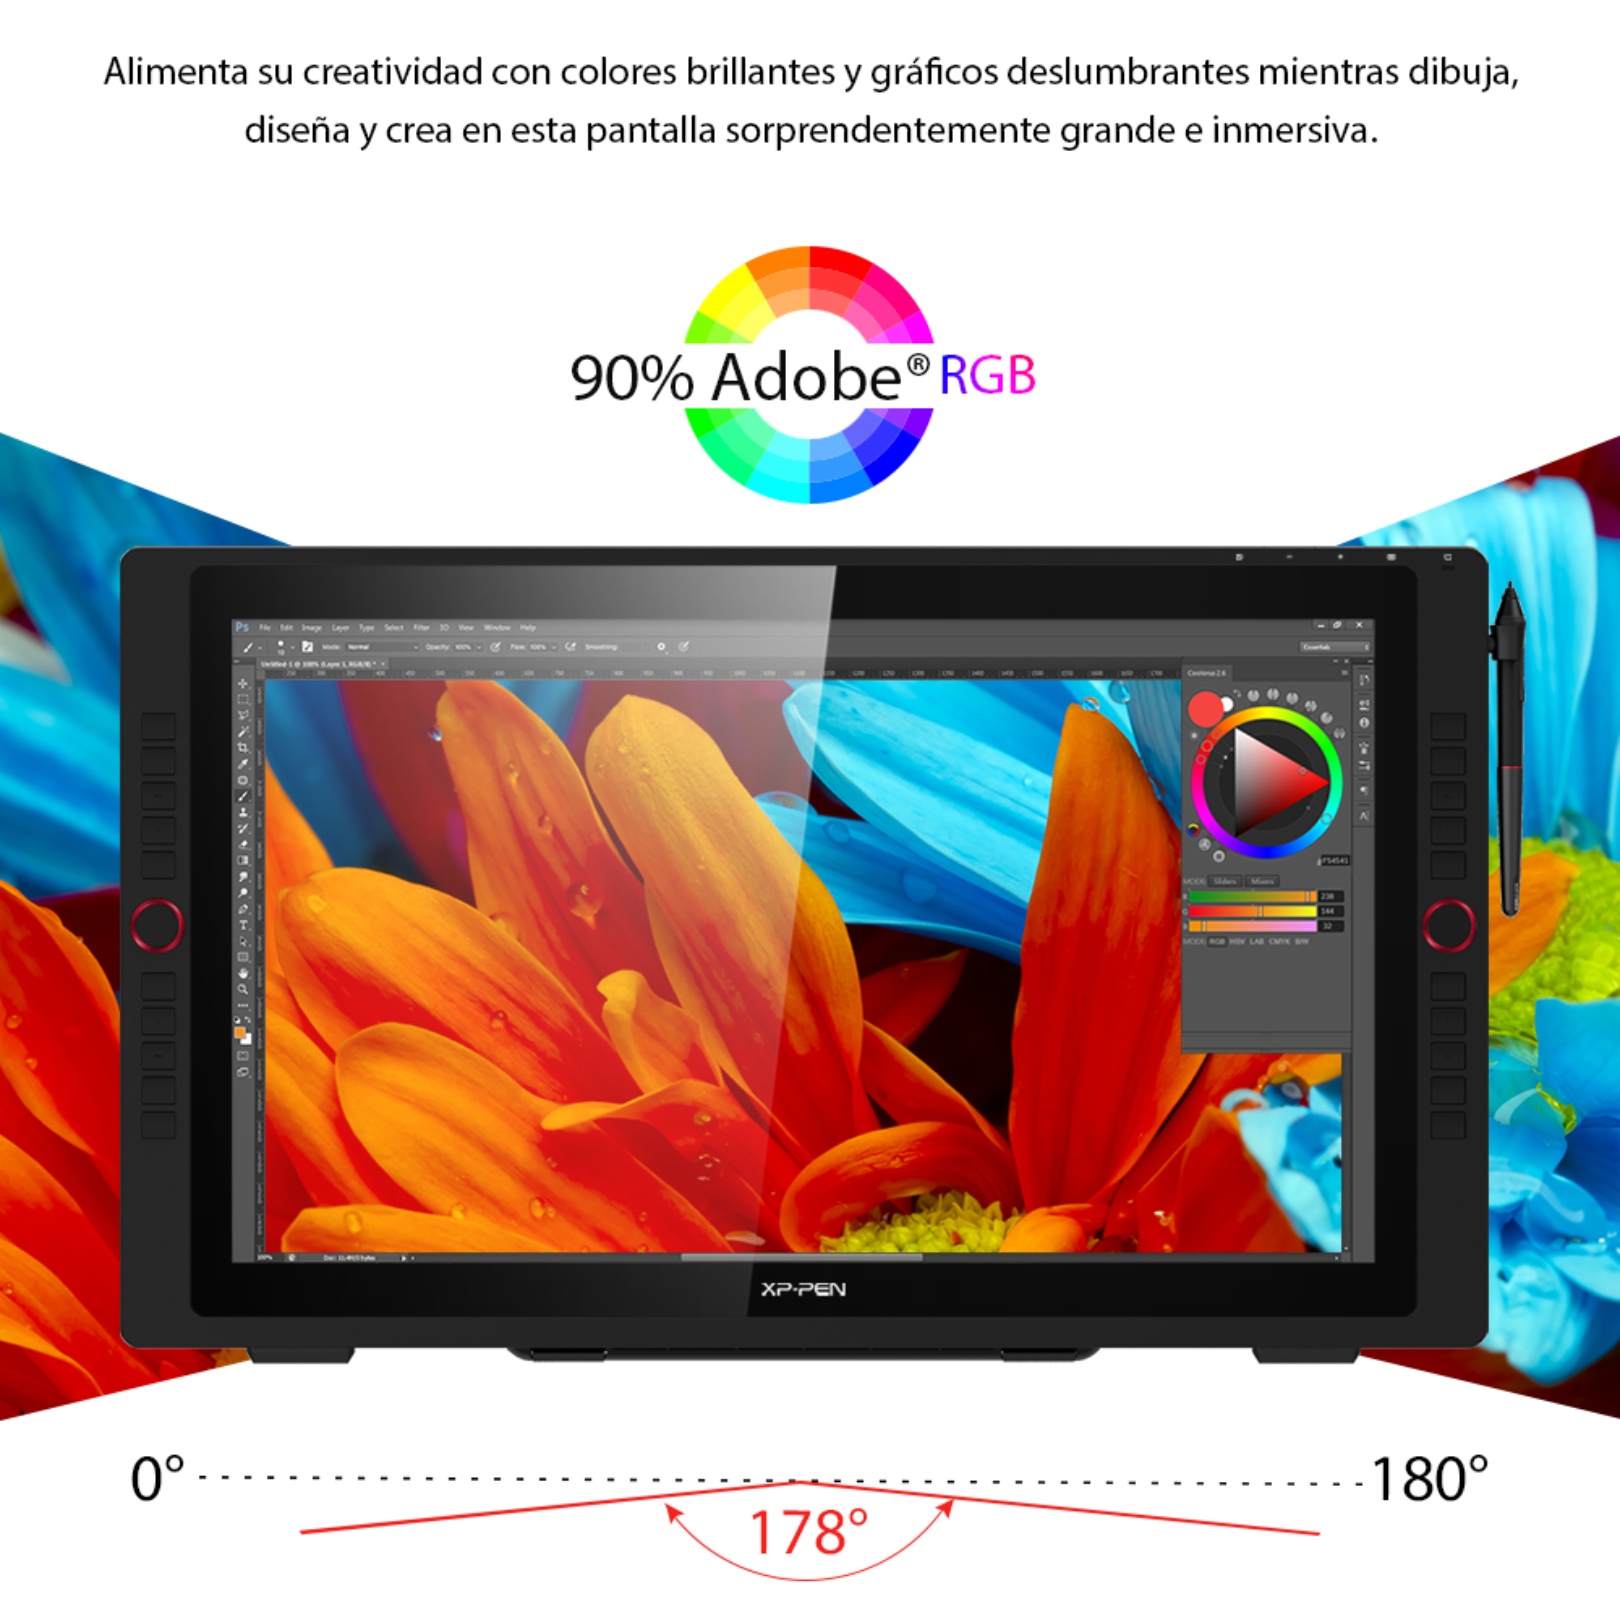 Pantalla Grafica XPPen Artist 24 Pro 2K QHD